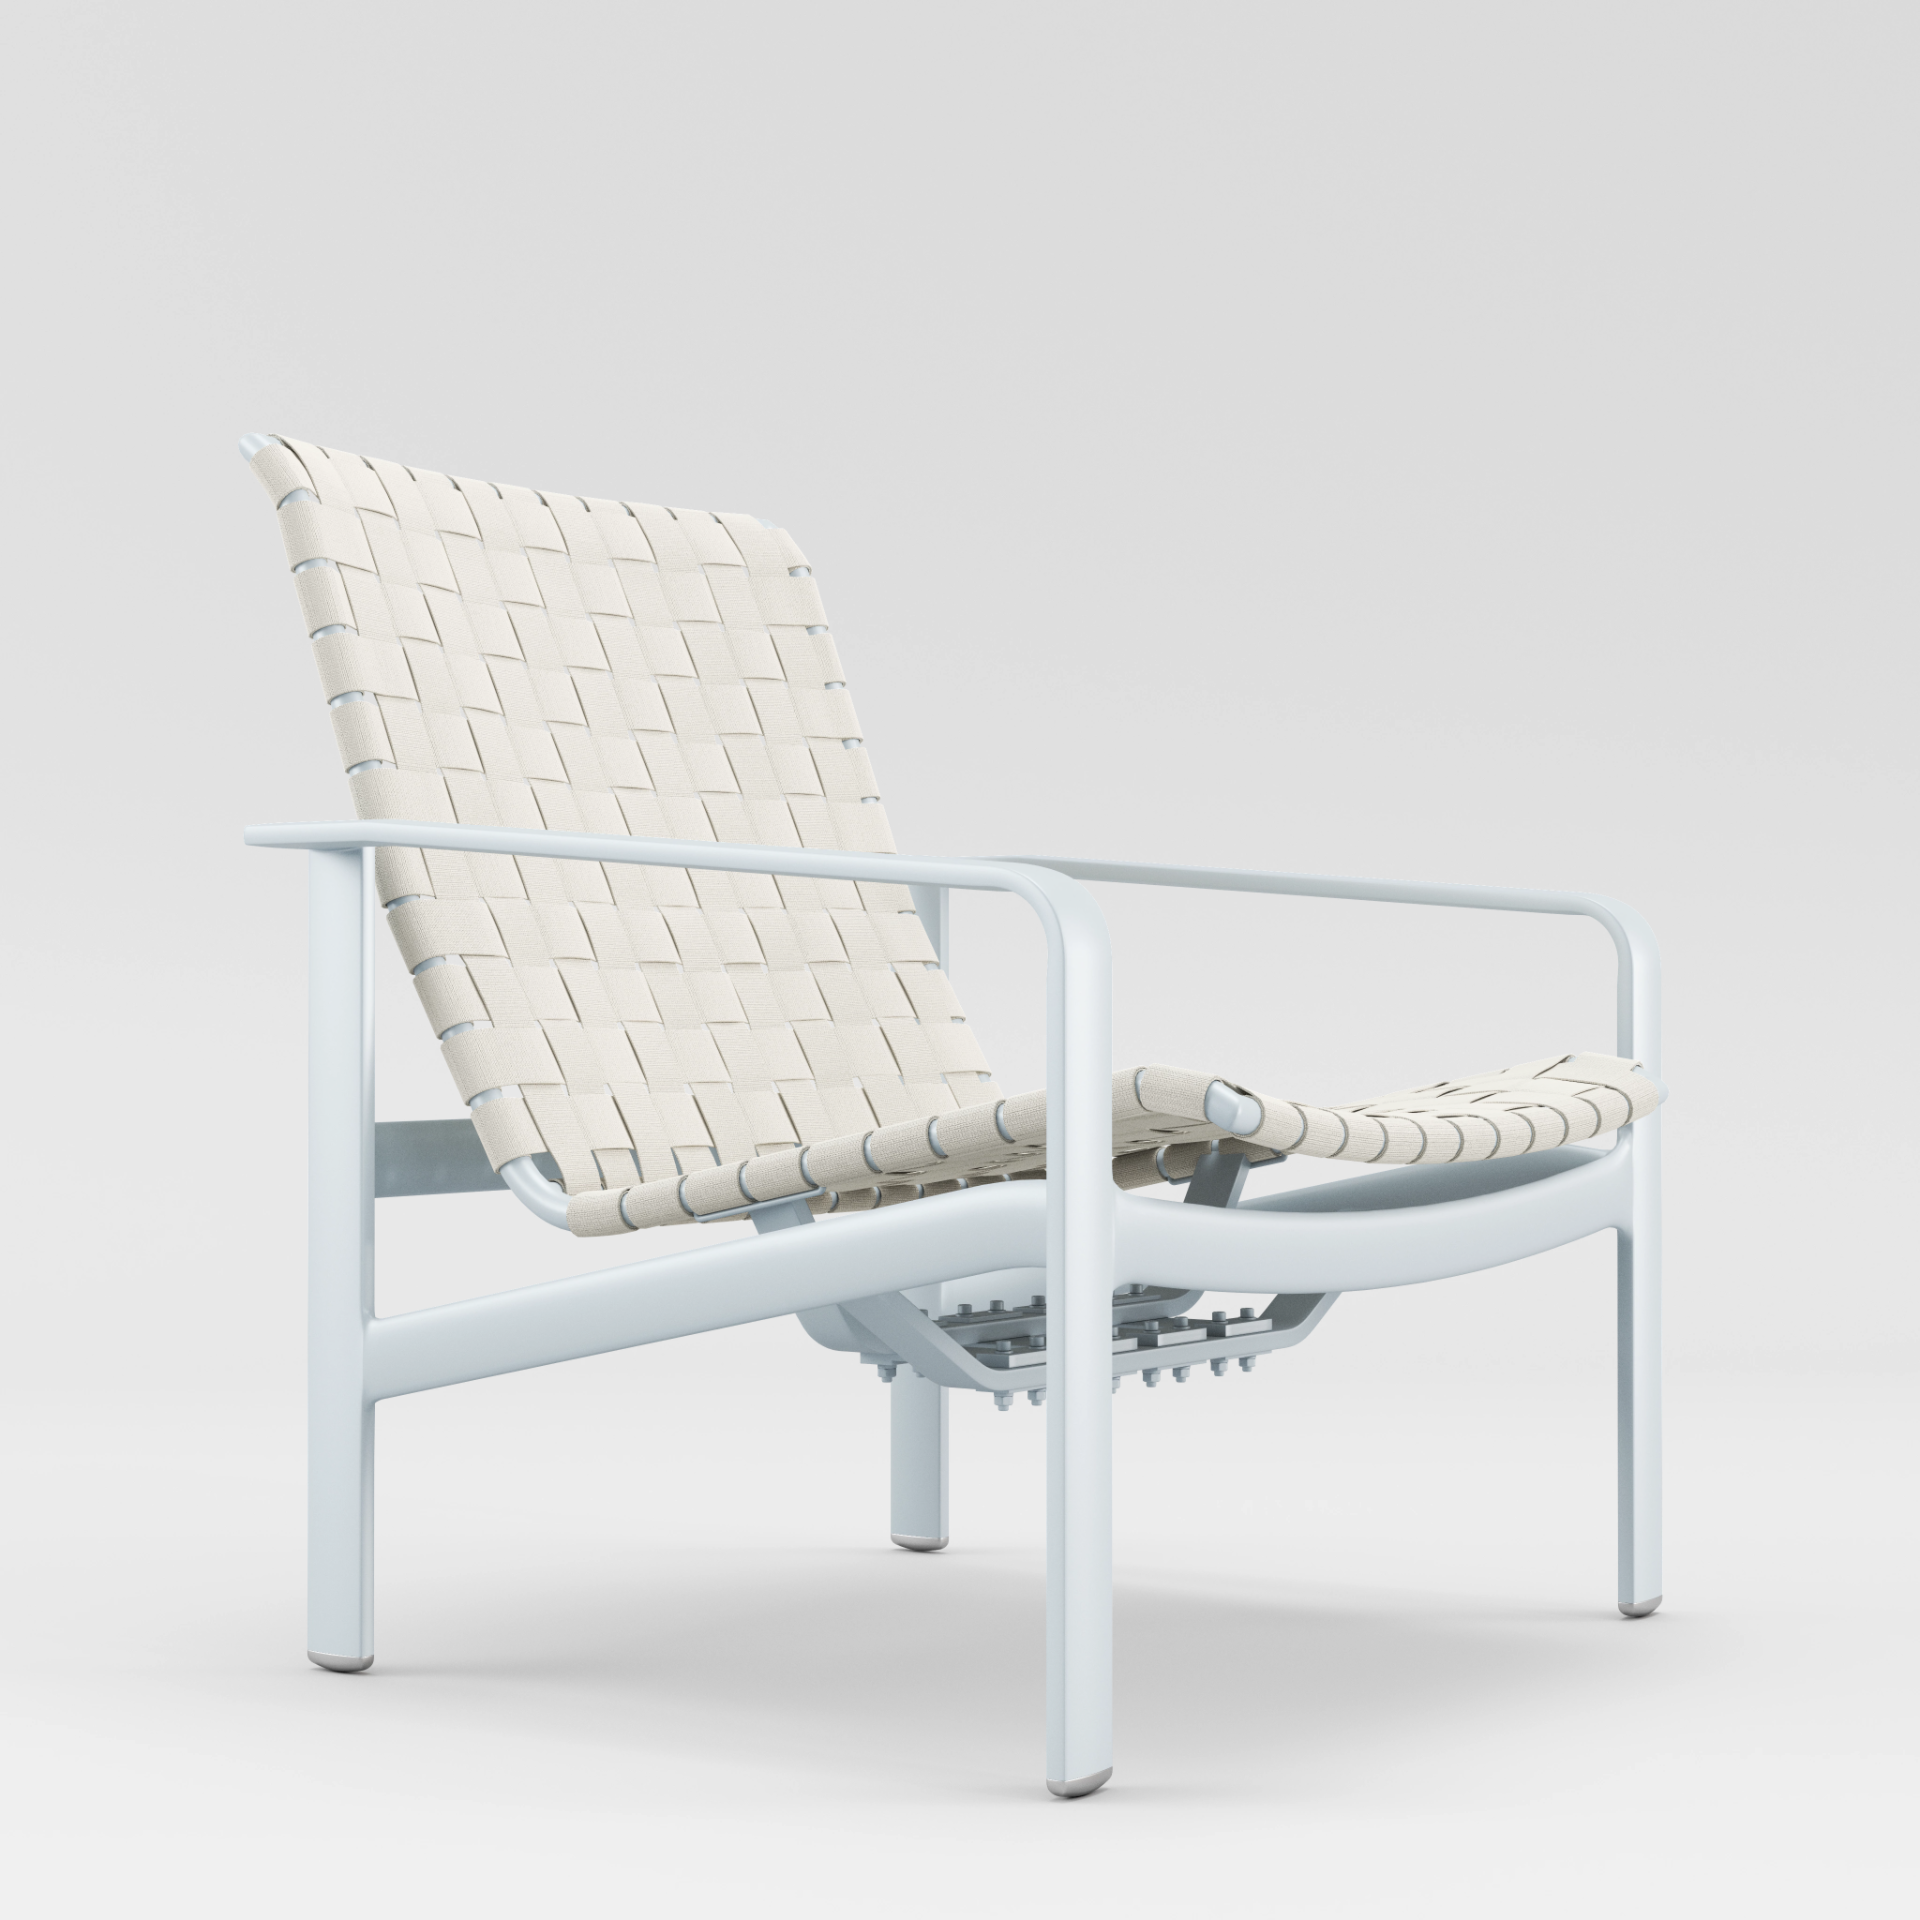 Softscape Strap Motion Lounge Chair by Brown Jordan